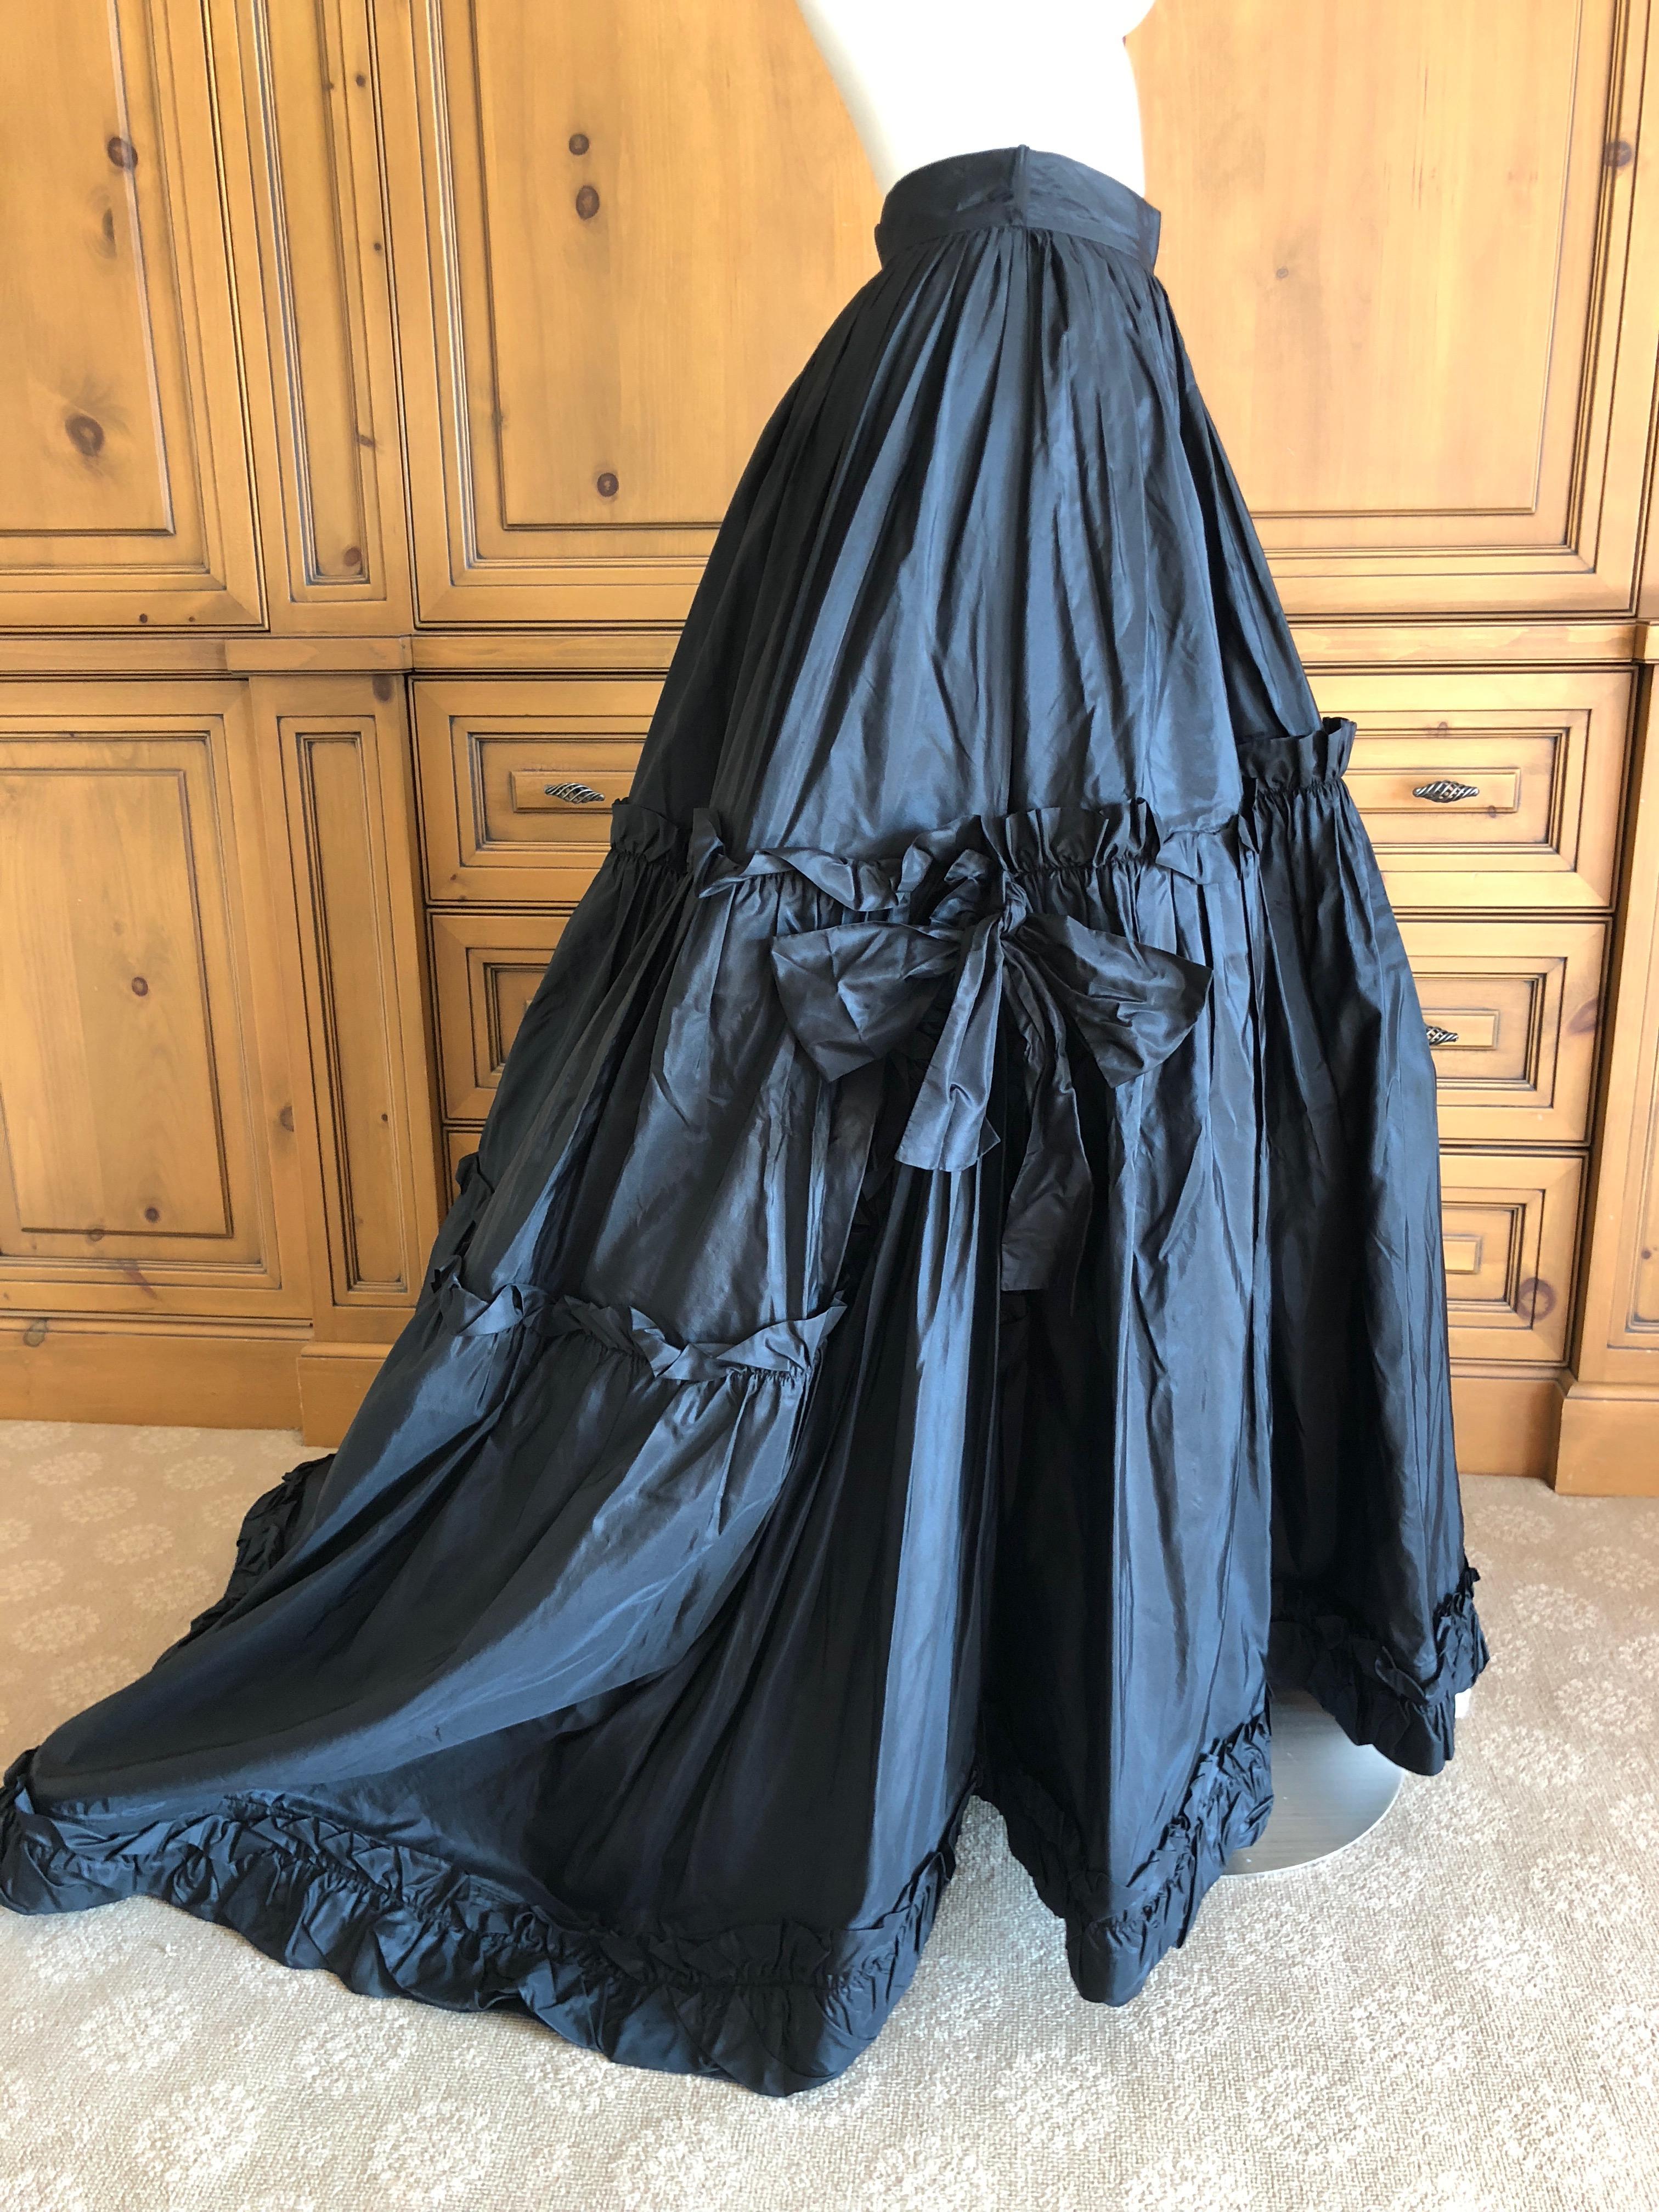 Yves Saint Laurent Rive Guache 1982 Dramatic Black Taffeta Ball Skirt with Train For Sale 7